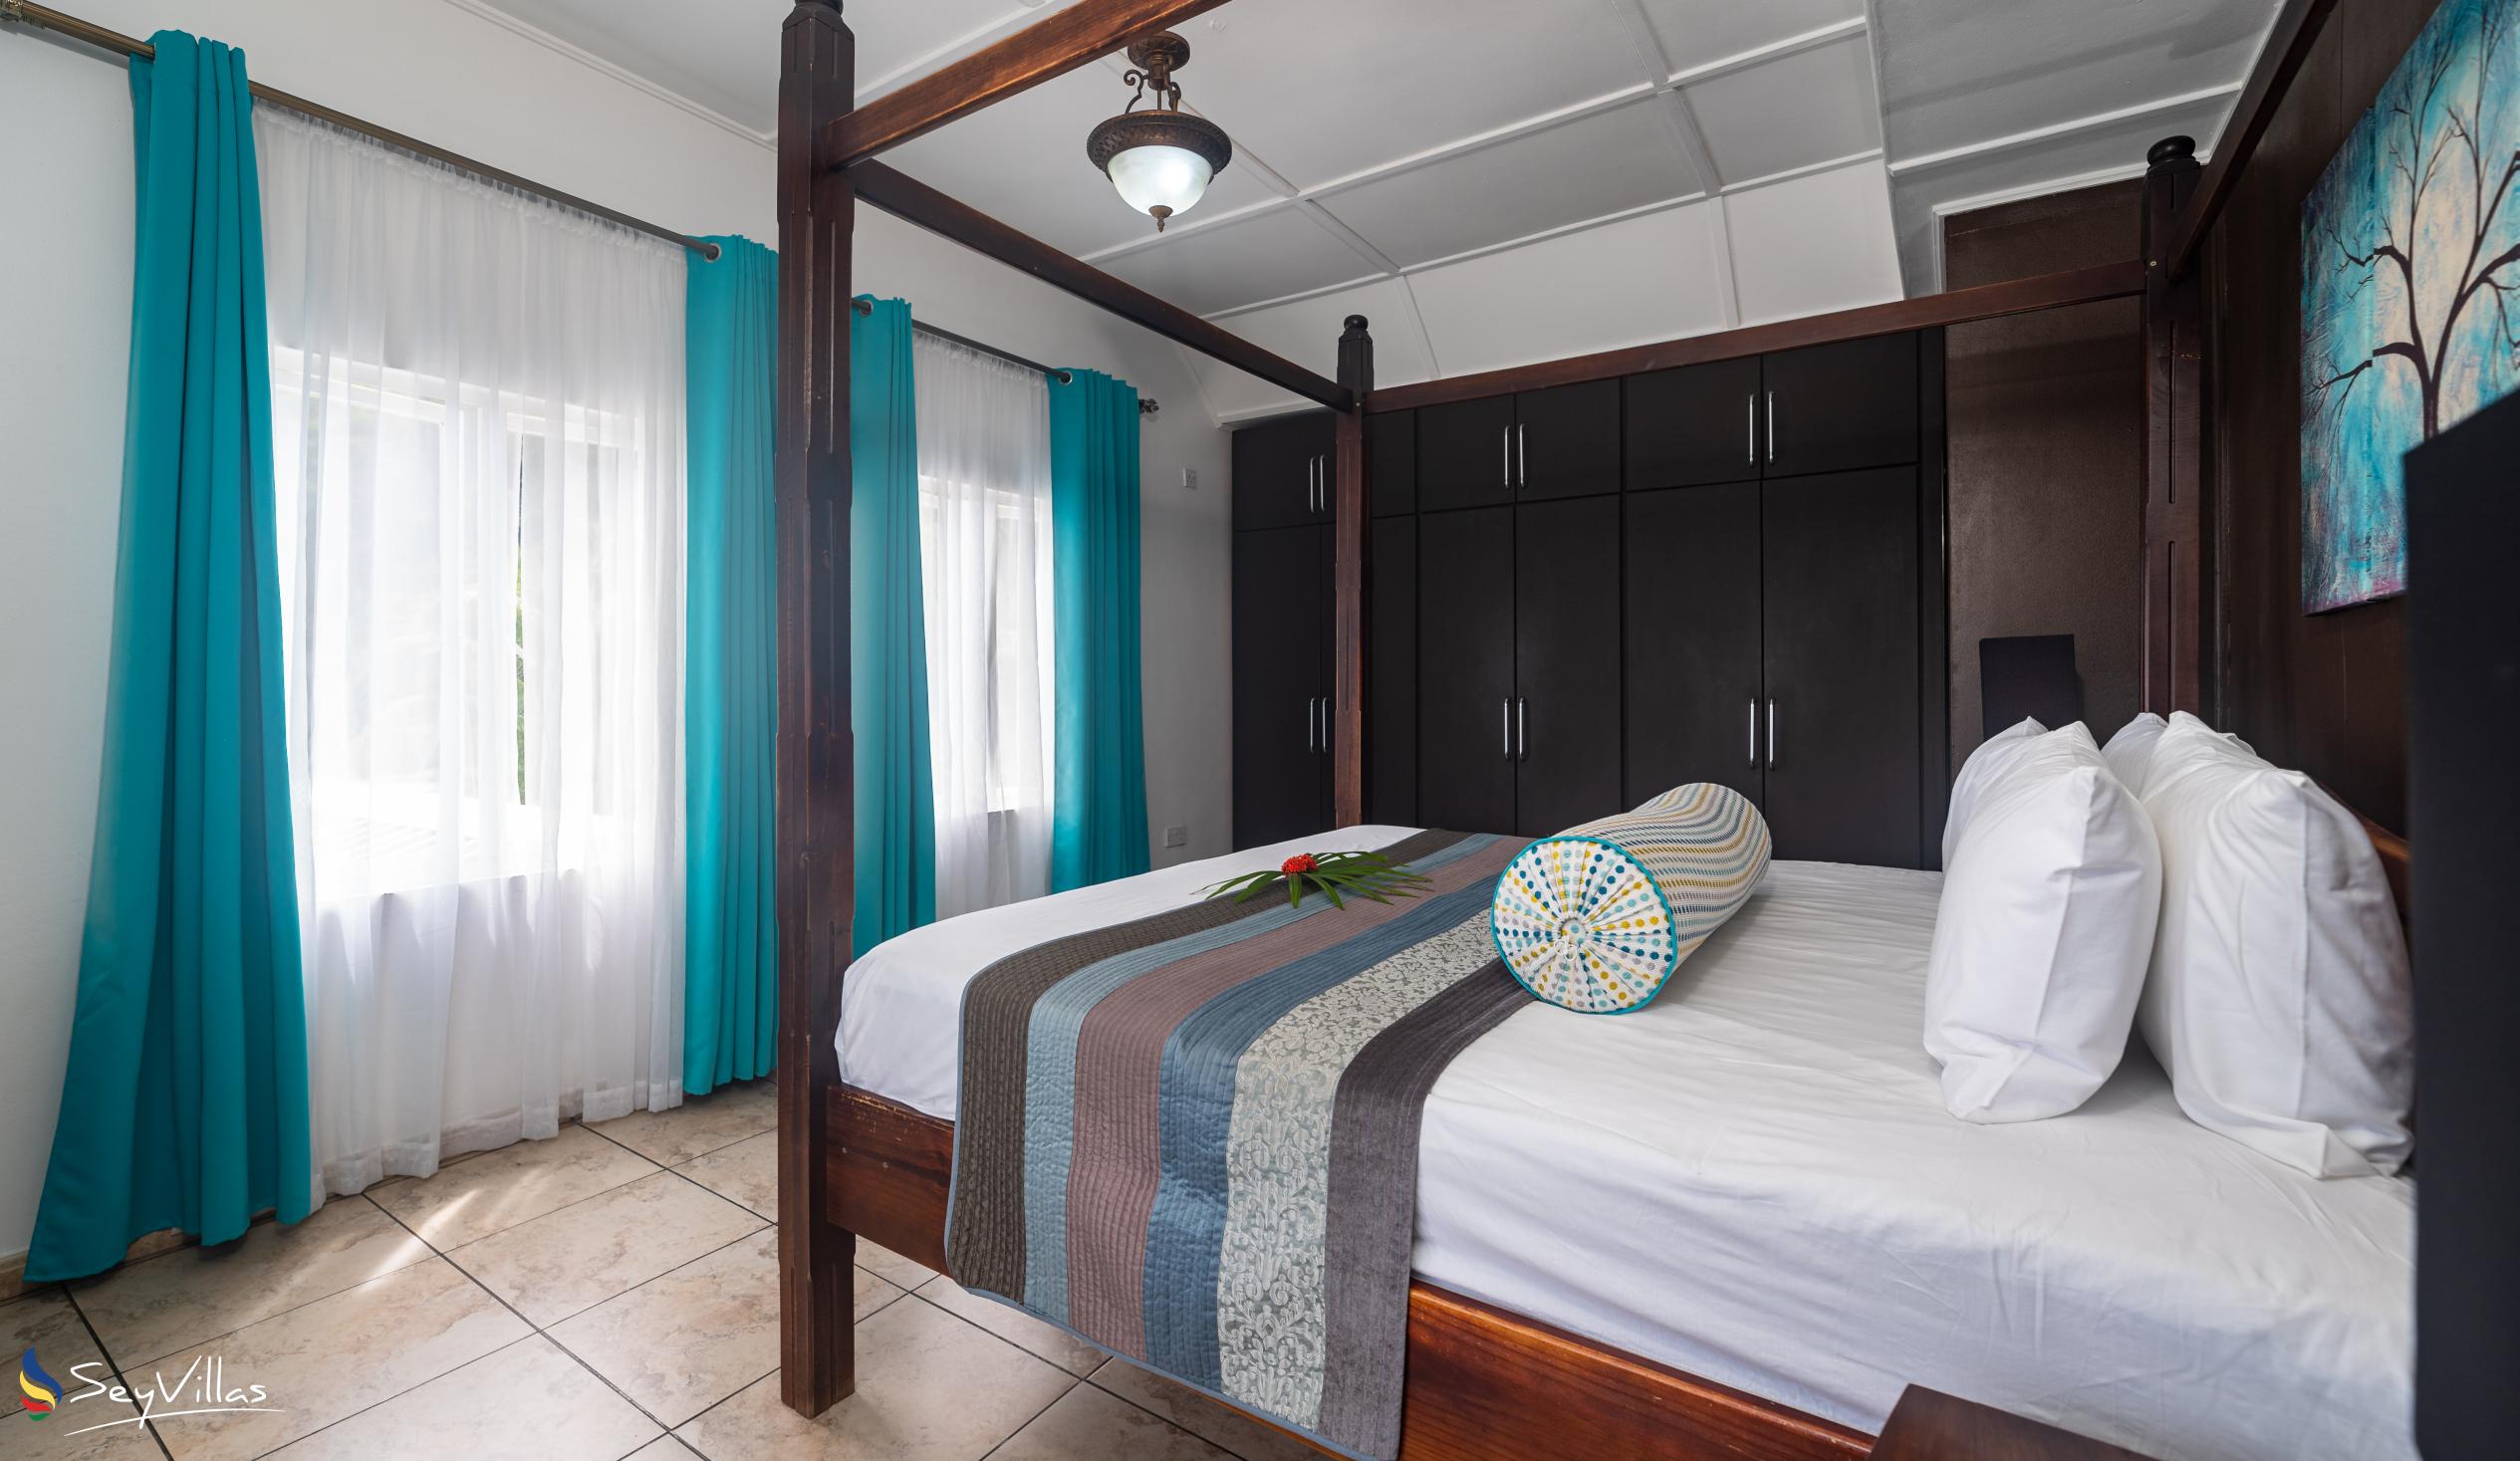 Photo 110: Stephna Residence - 2-Bedroom Villa - Mahé (Seychelles)